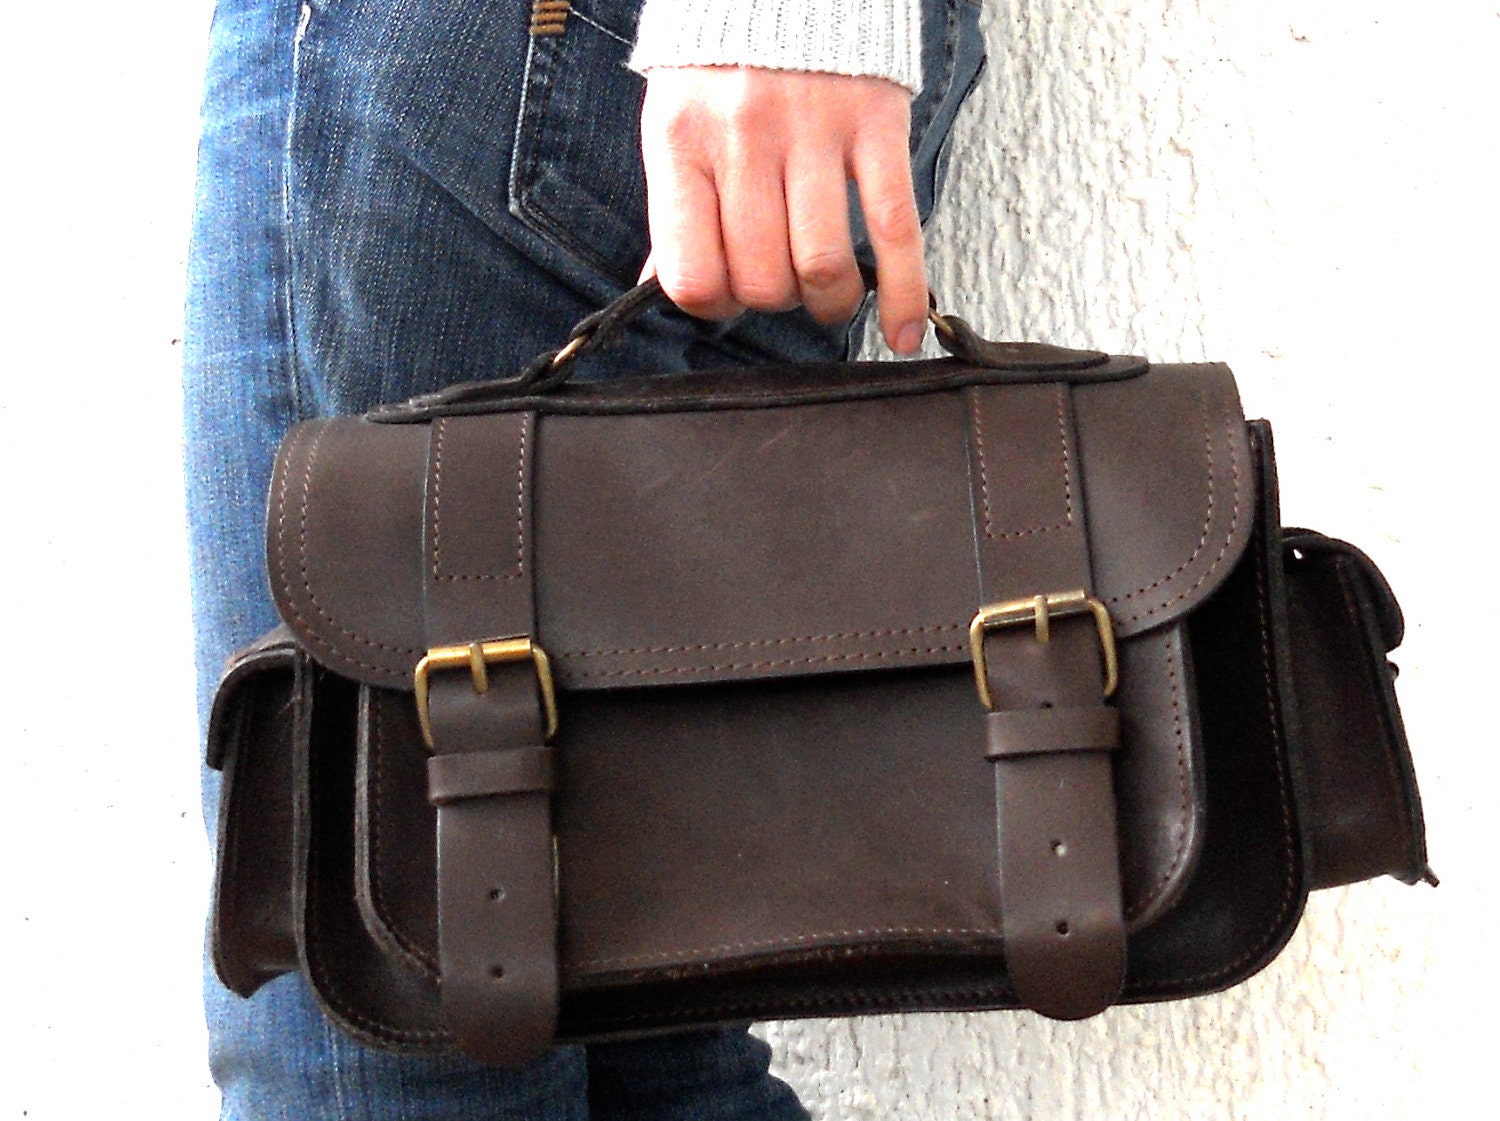 Medium size leather camera bag / Women/Men dark brown leather